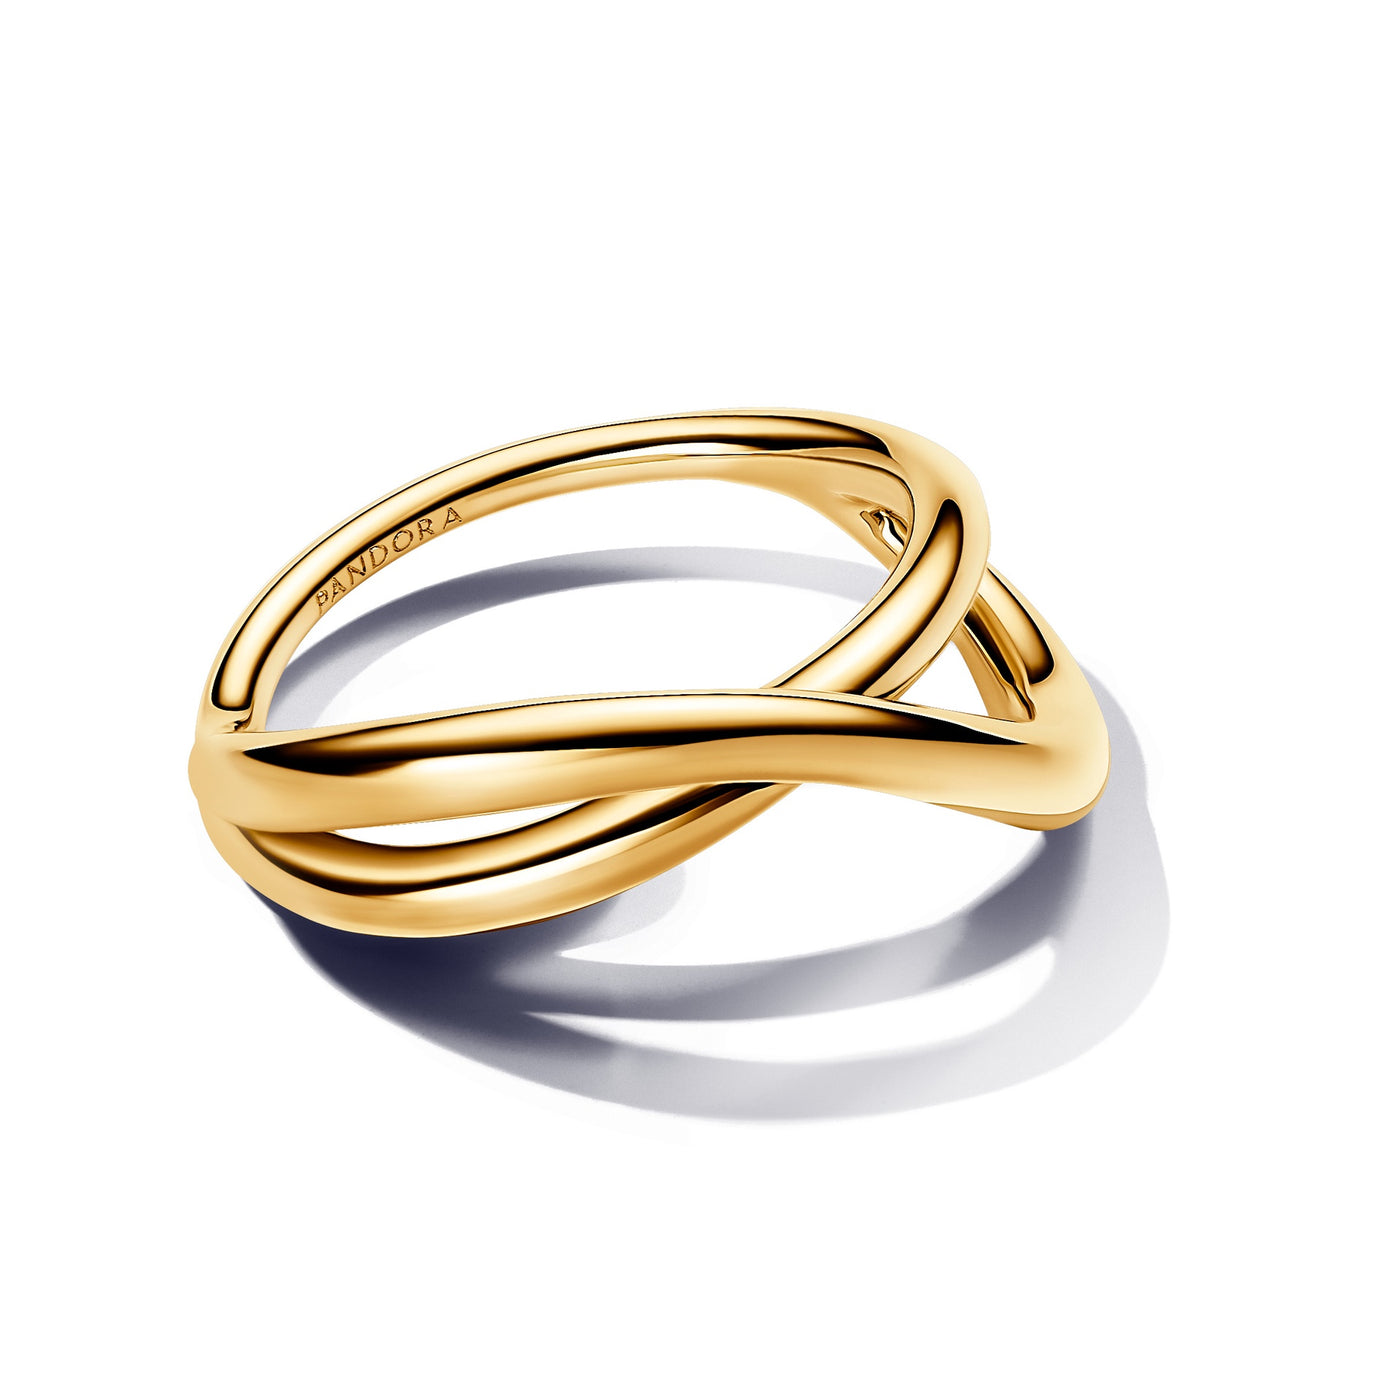 Pandora Organically Shaped Infinity Ring